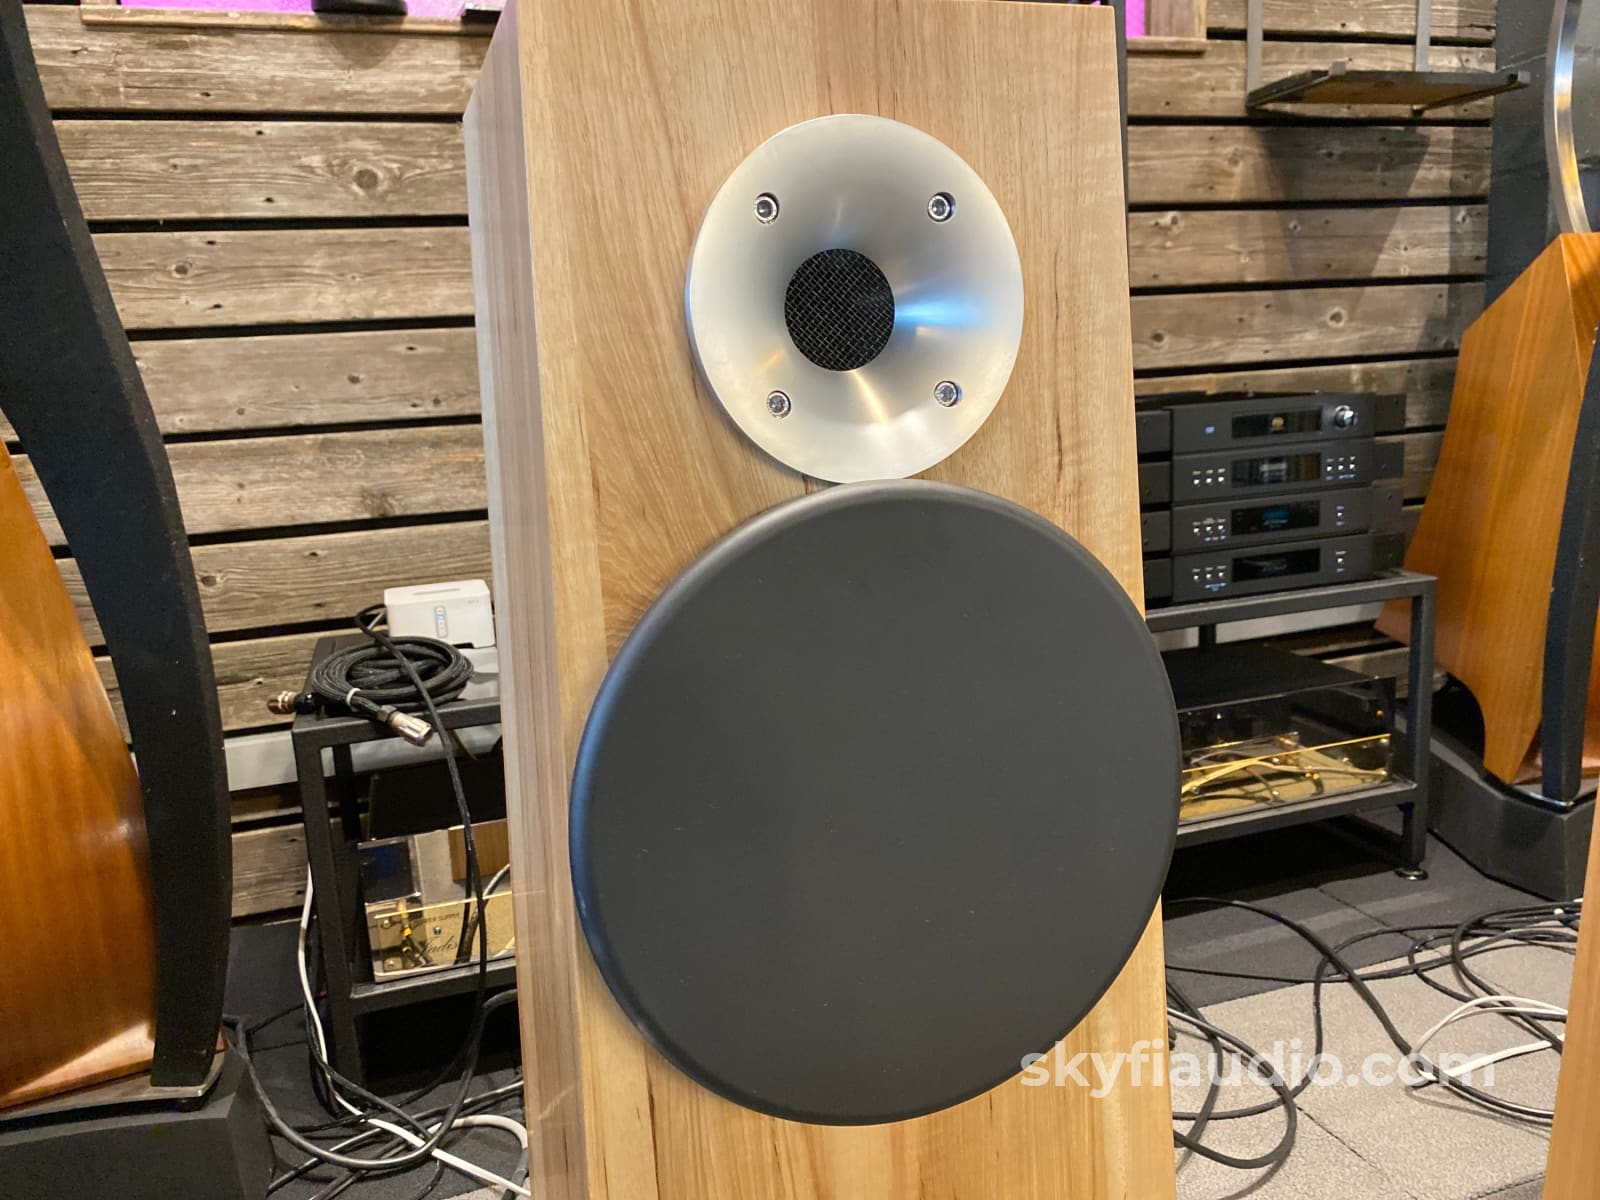 Zu Audio - Soul Supreme High Efficiency Speakers In Walnut